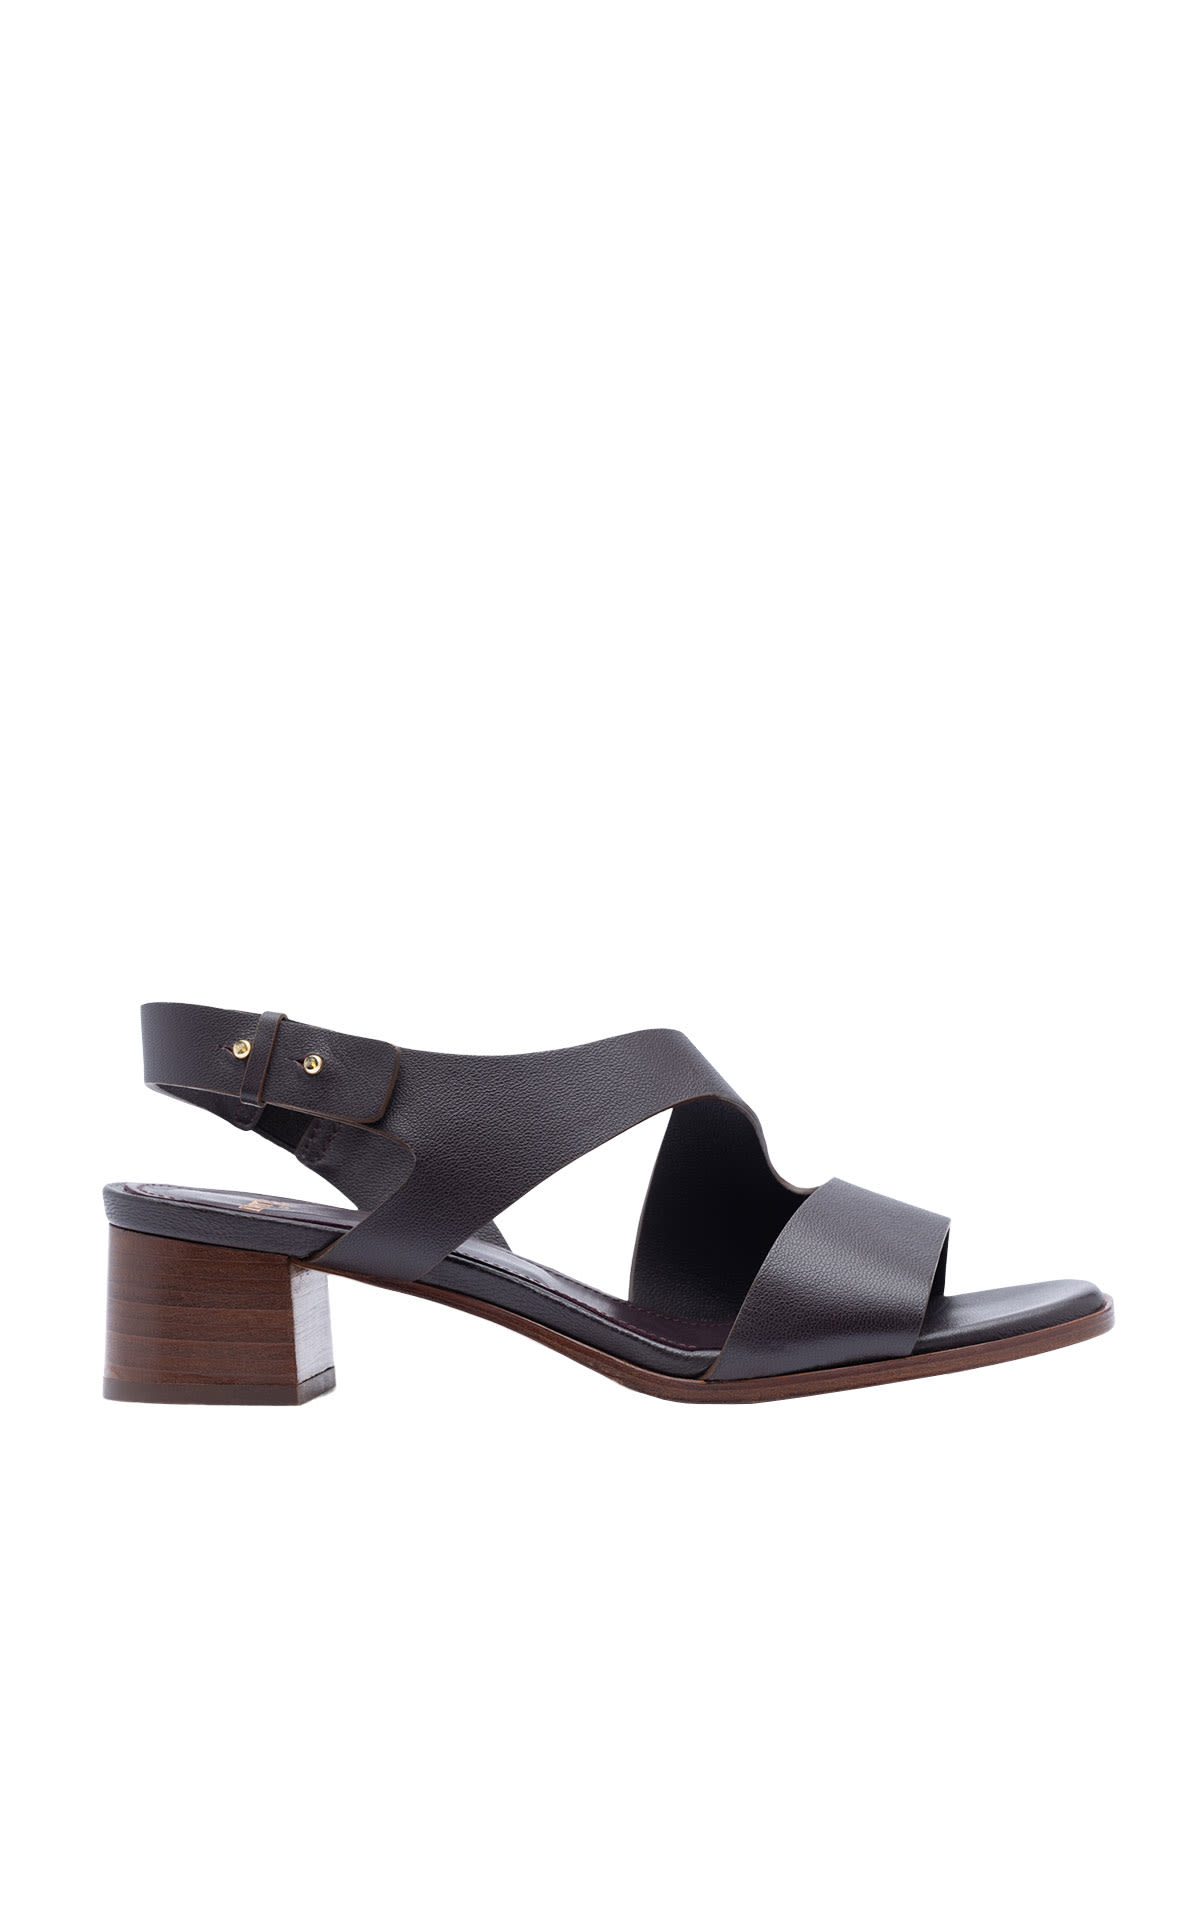 Black leather sandal with low heel Lottusse